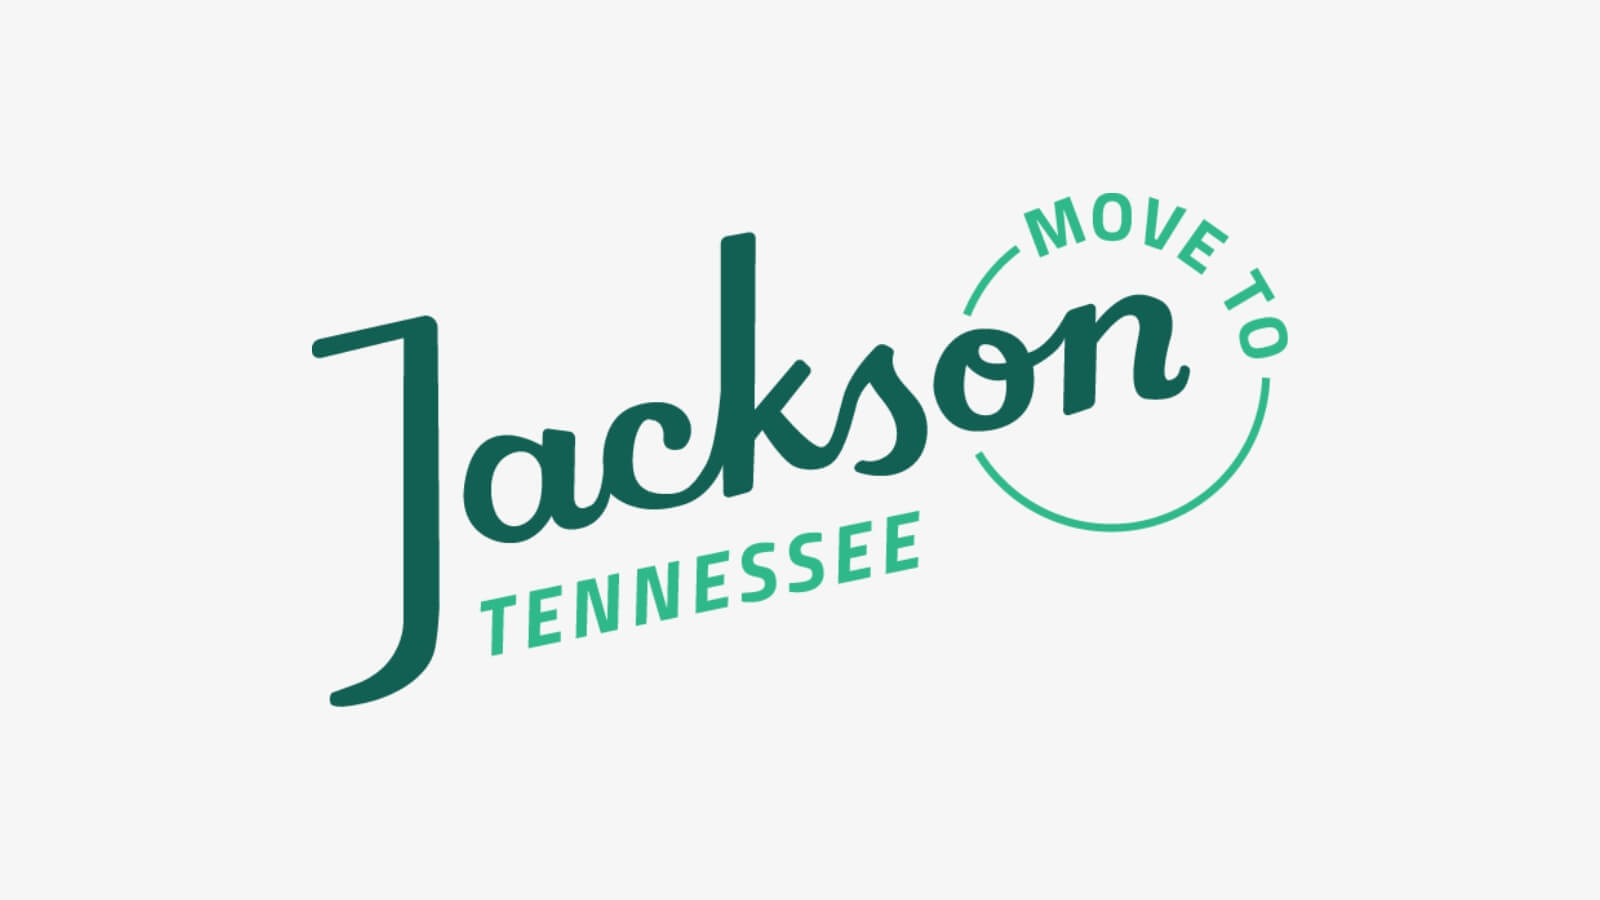 Move to Jackson